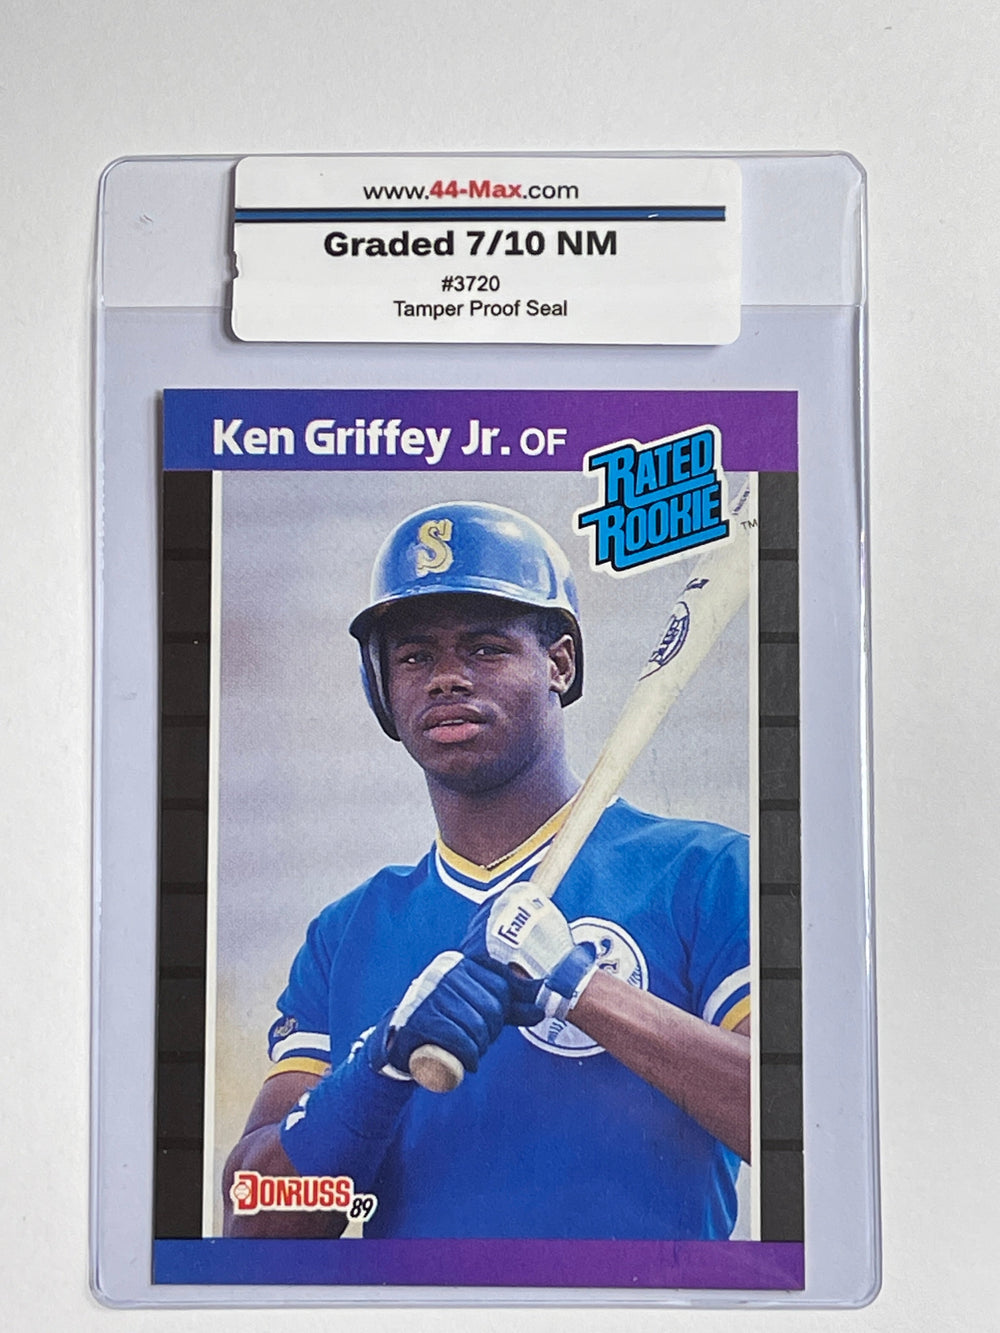 Ken Griffey Jr 1991 Donruss Mariners #33 Card. 44-Max 7/10 NM #3720